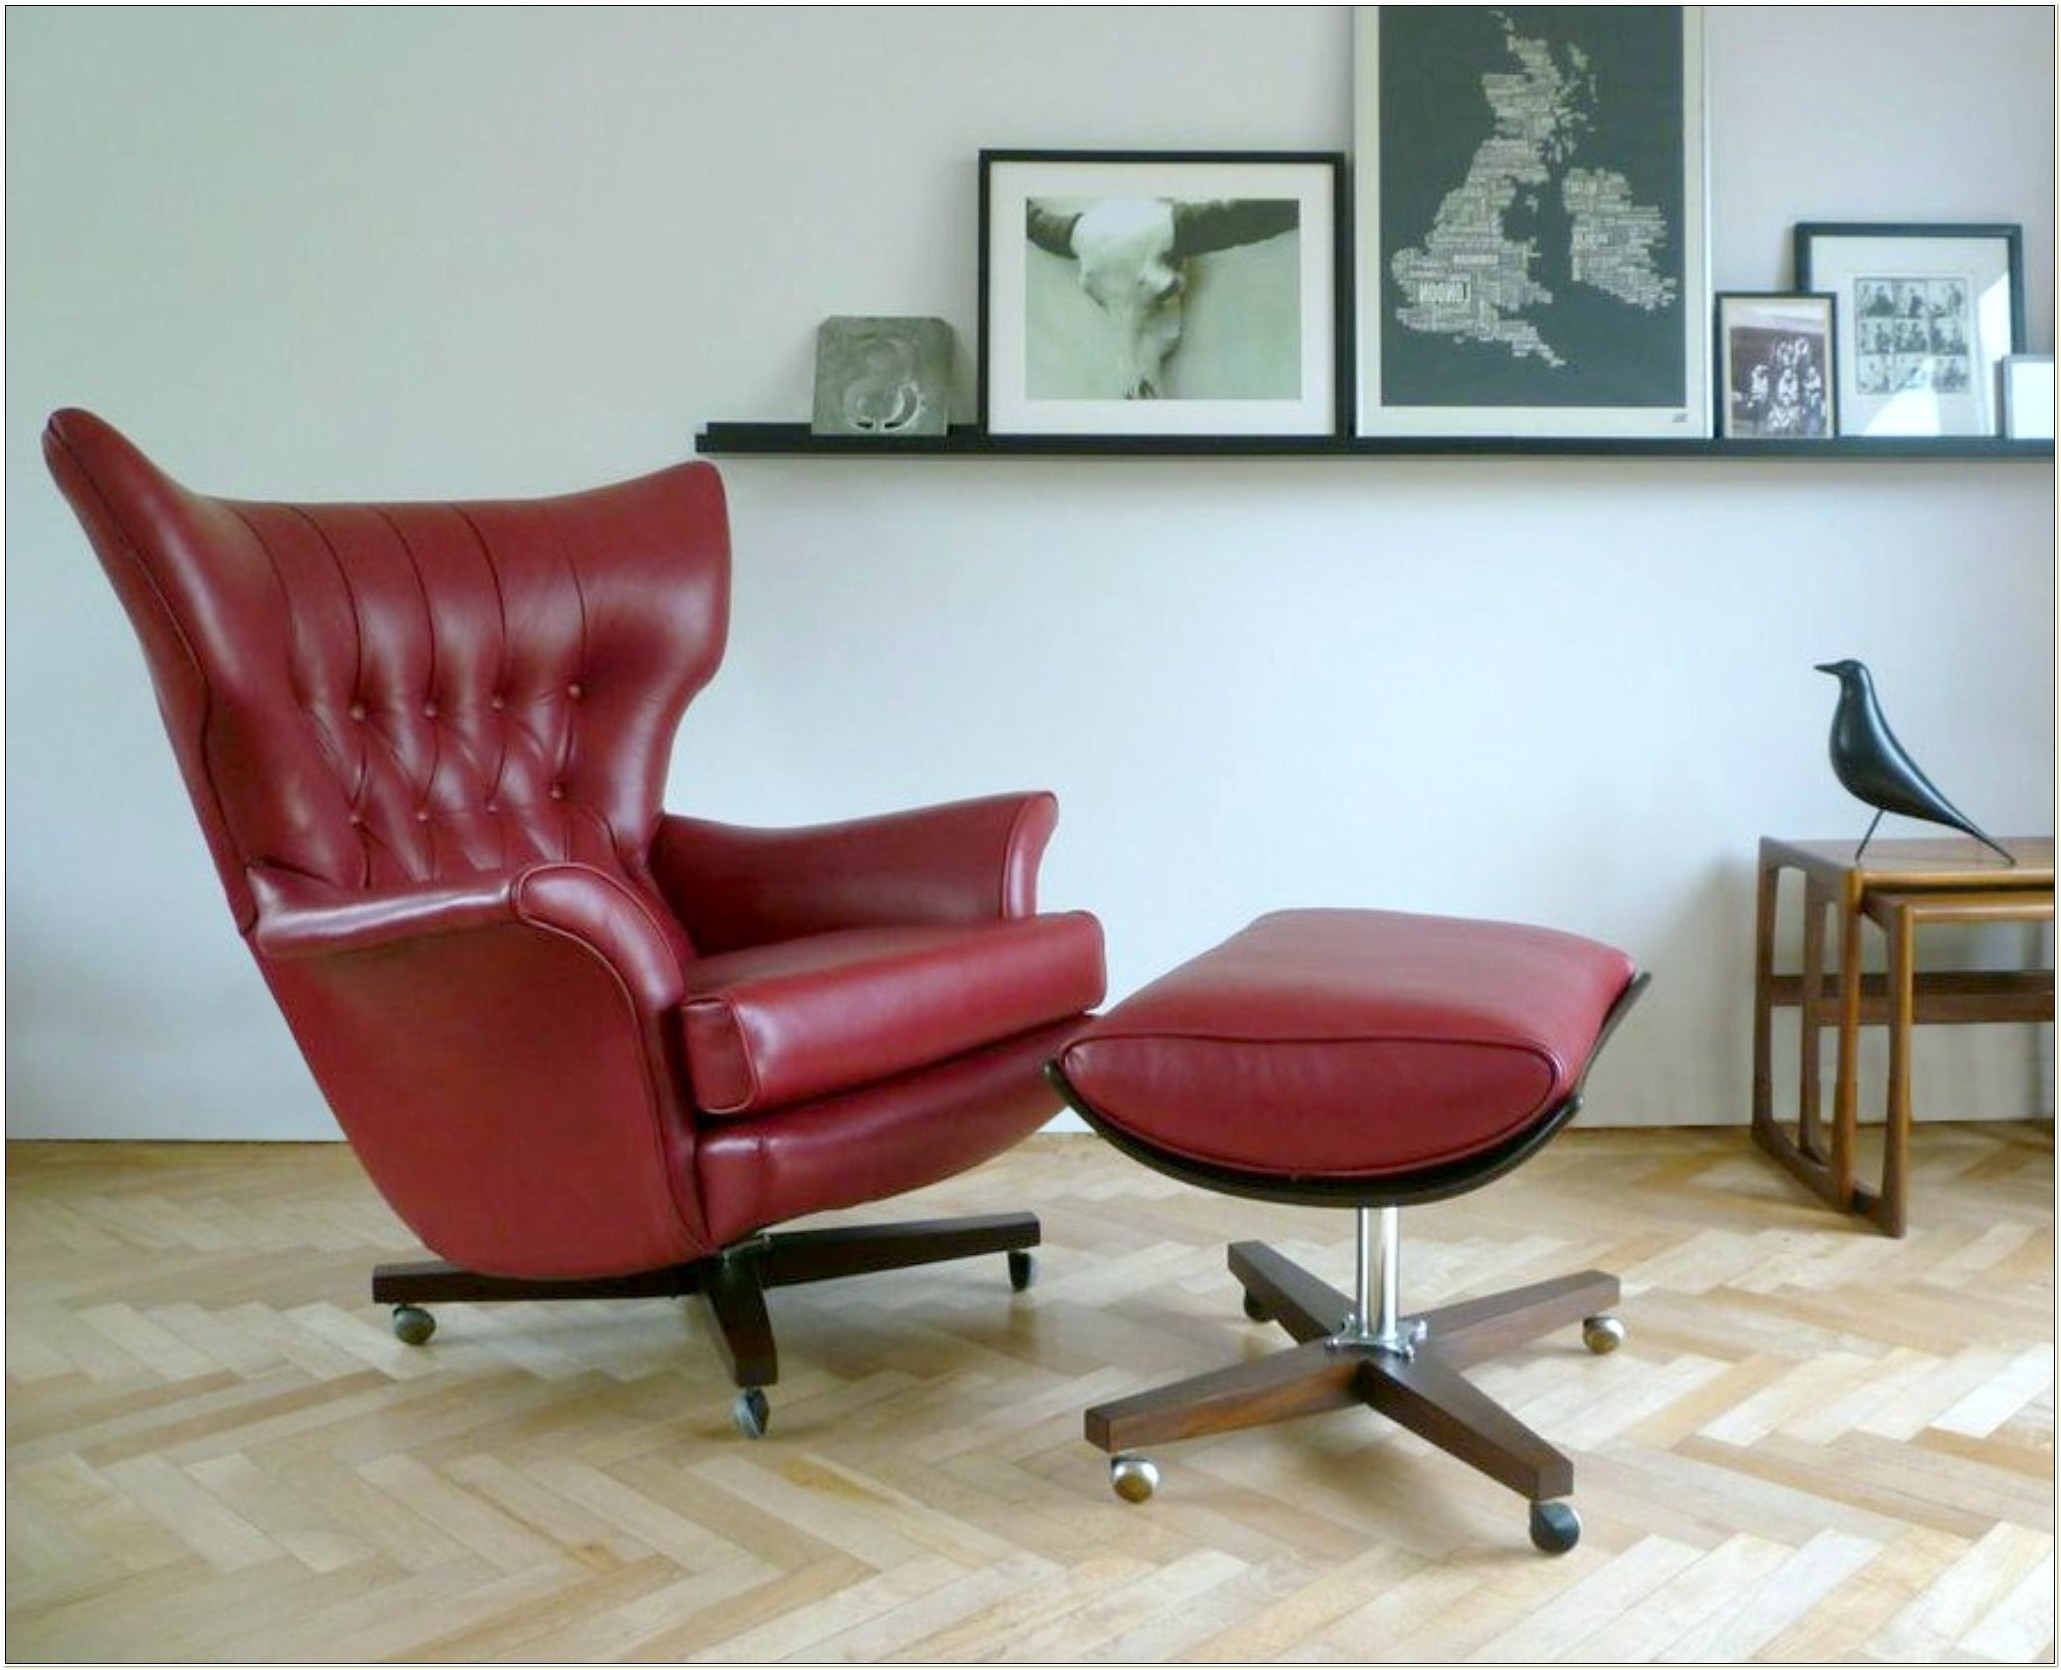 Ergonomic Living Room Chairs
 Best Ergonomic Living Room Chairs Chairs Home